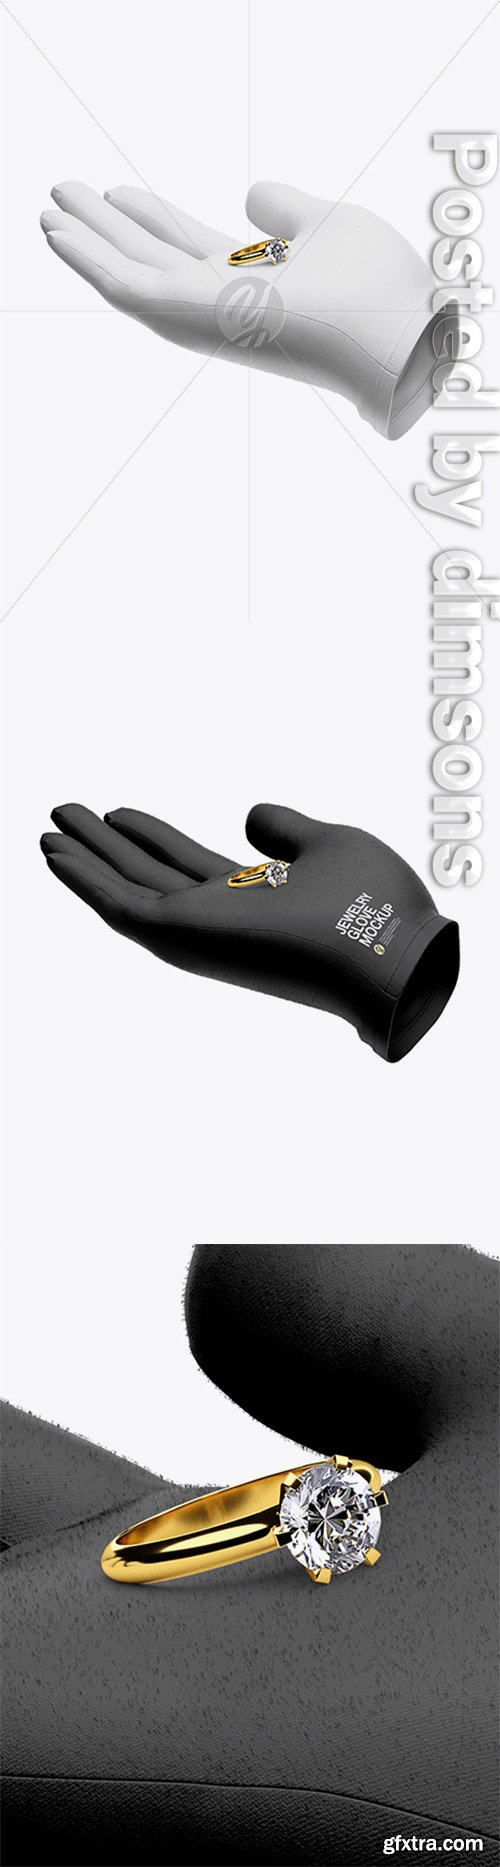 Jewelry Glove w/ Ring Mockup 35610